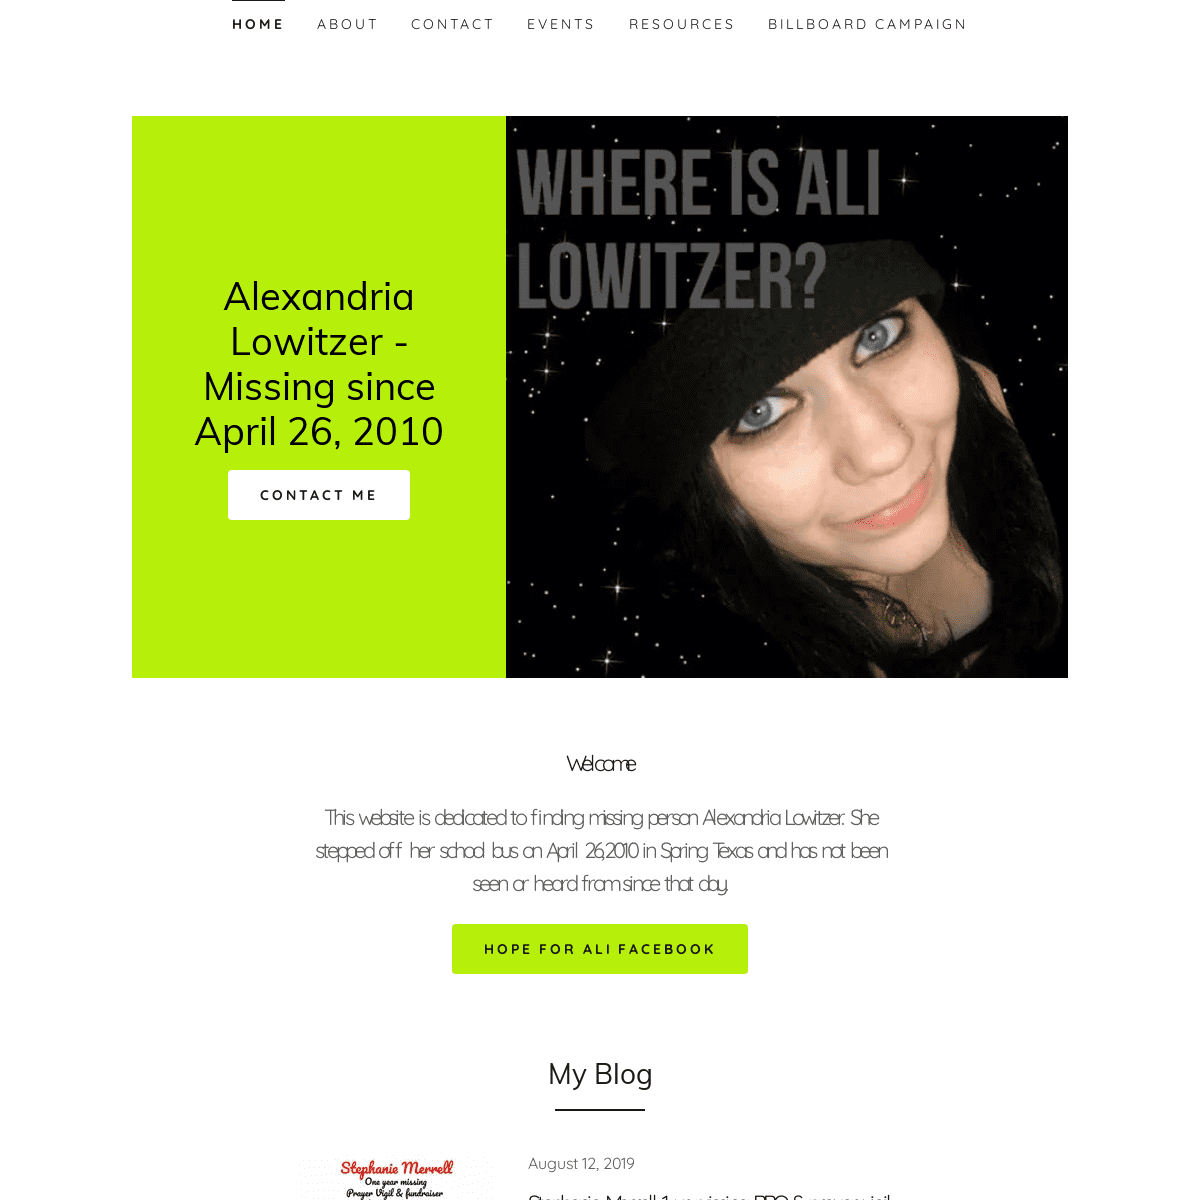 Alexandria Lowitzer - Missing since April 26, 2010